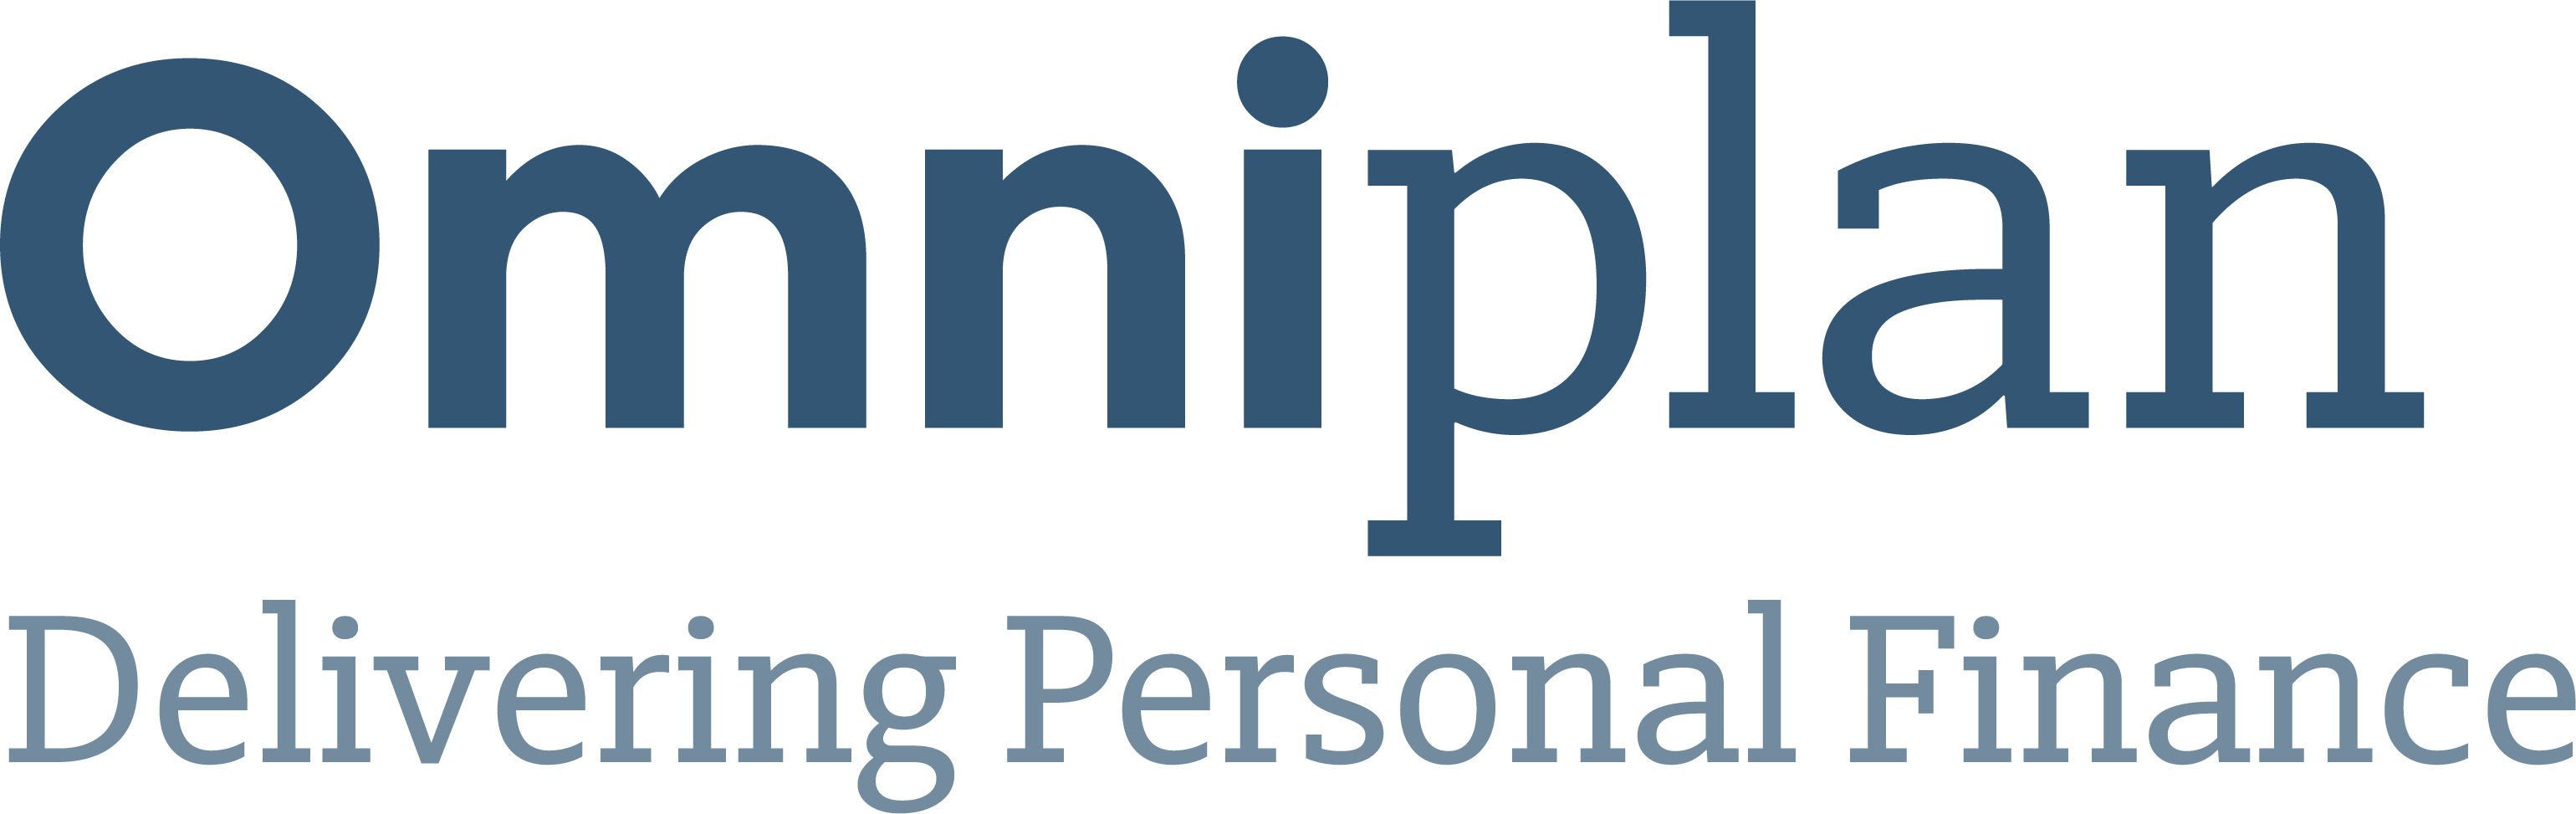 omniplan-logo_Delivering Personal Finance